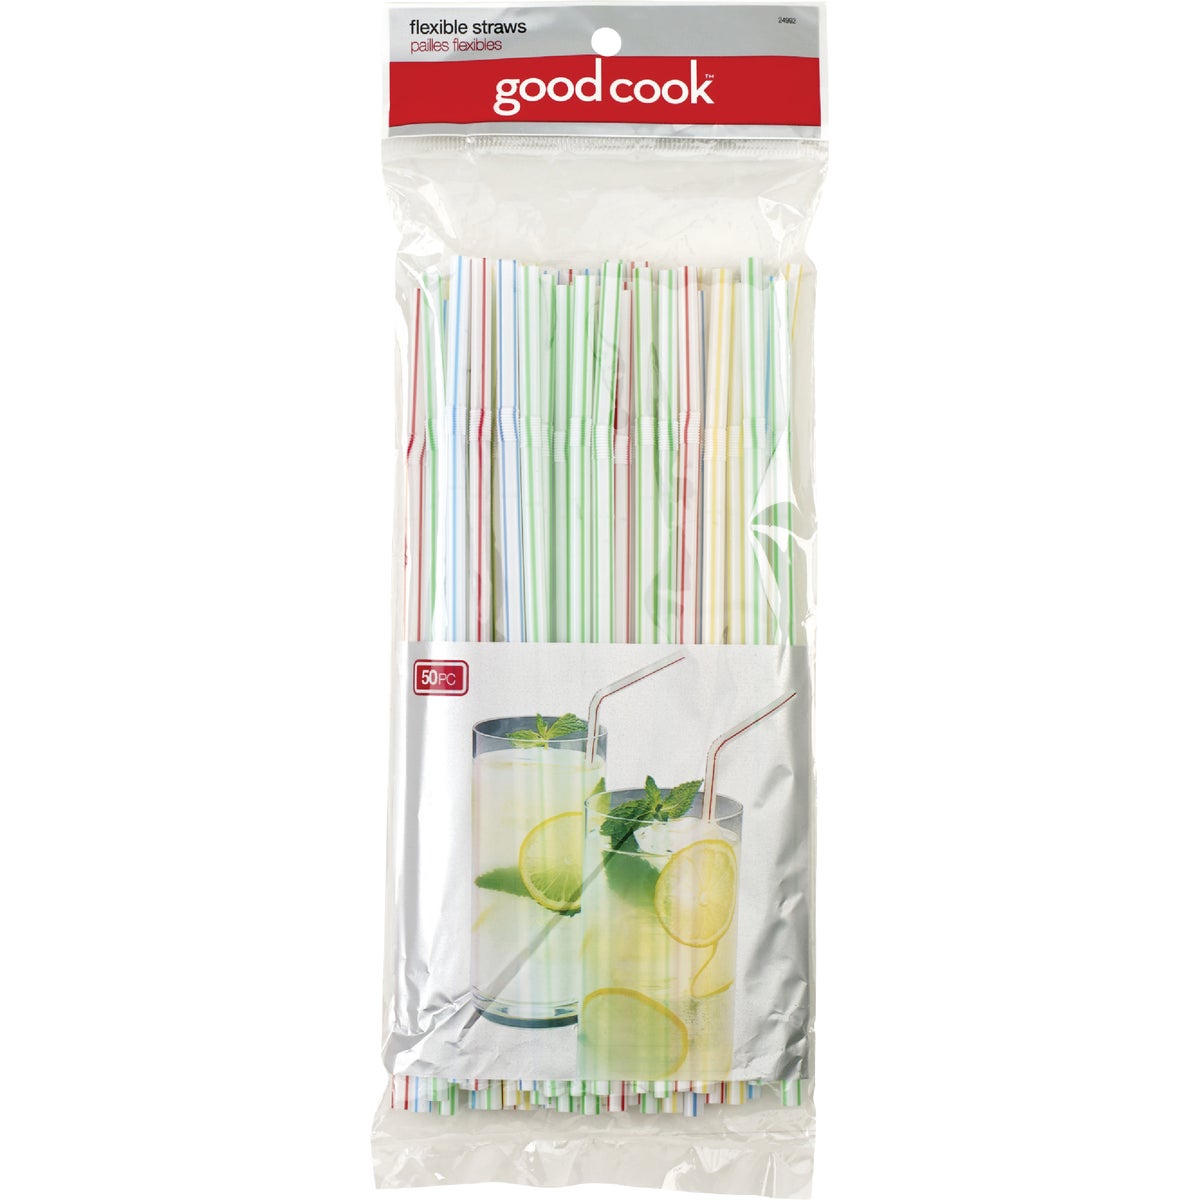 Goodcook 9 In. Plastic Flex Straw (50-Count)